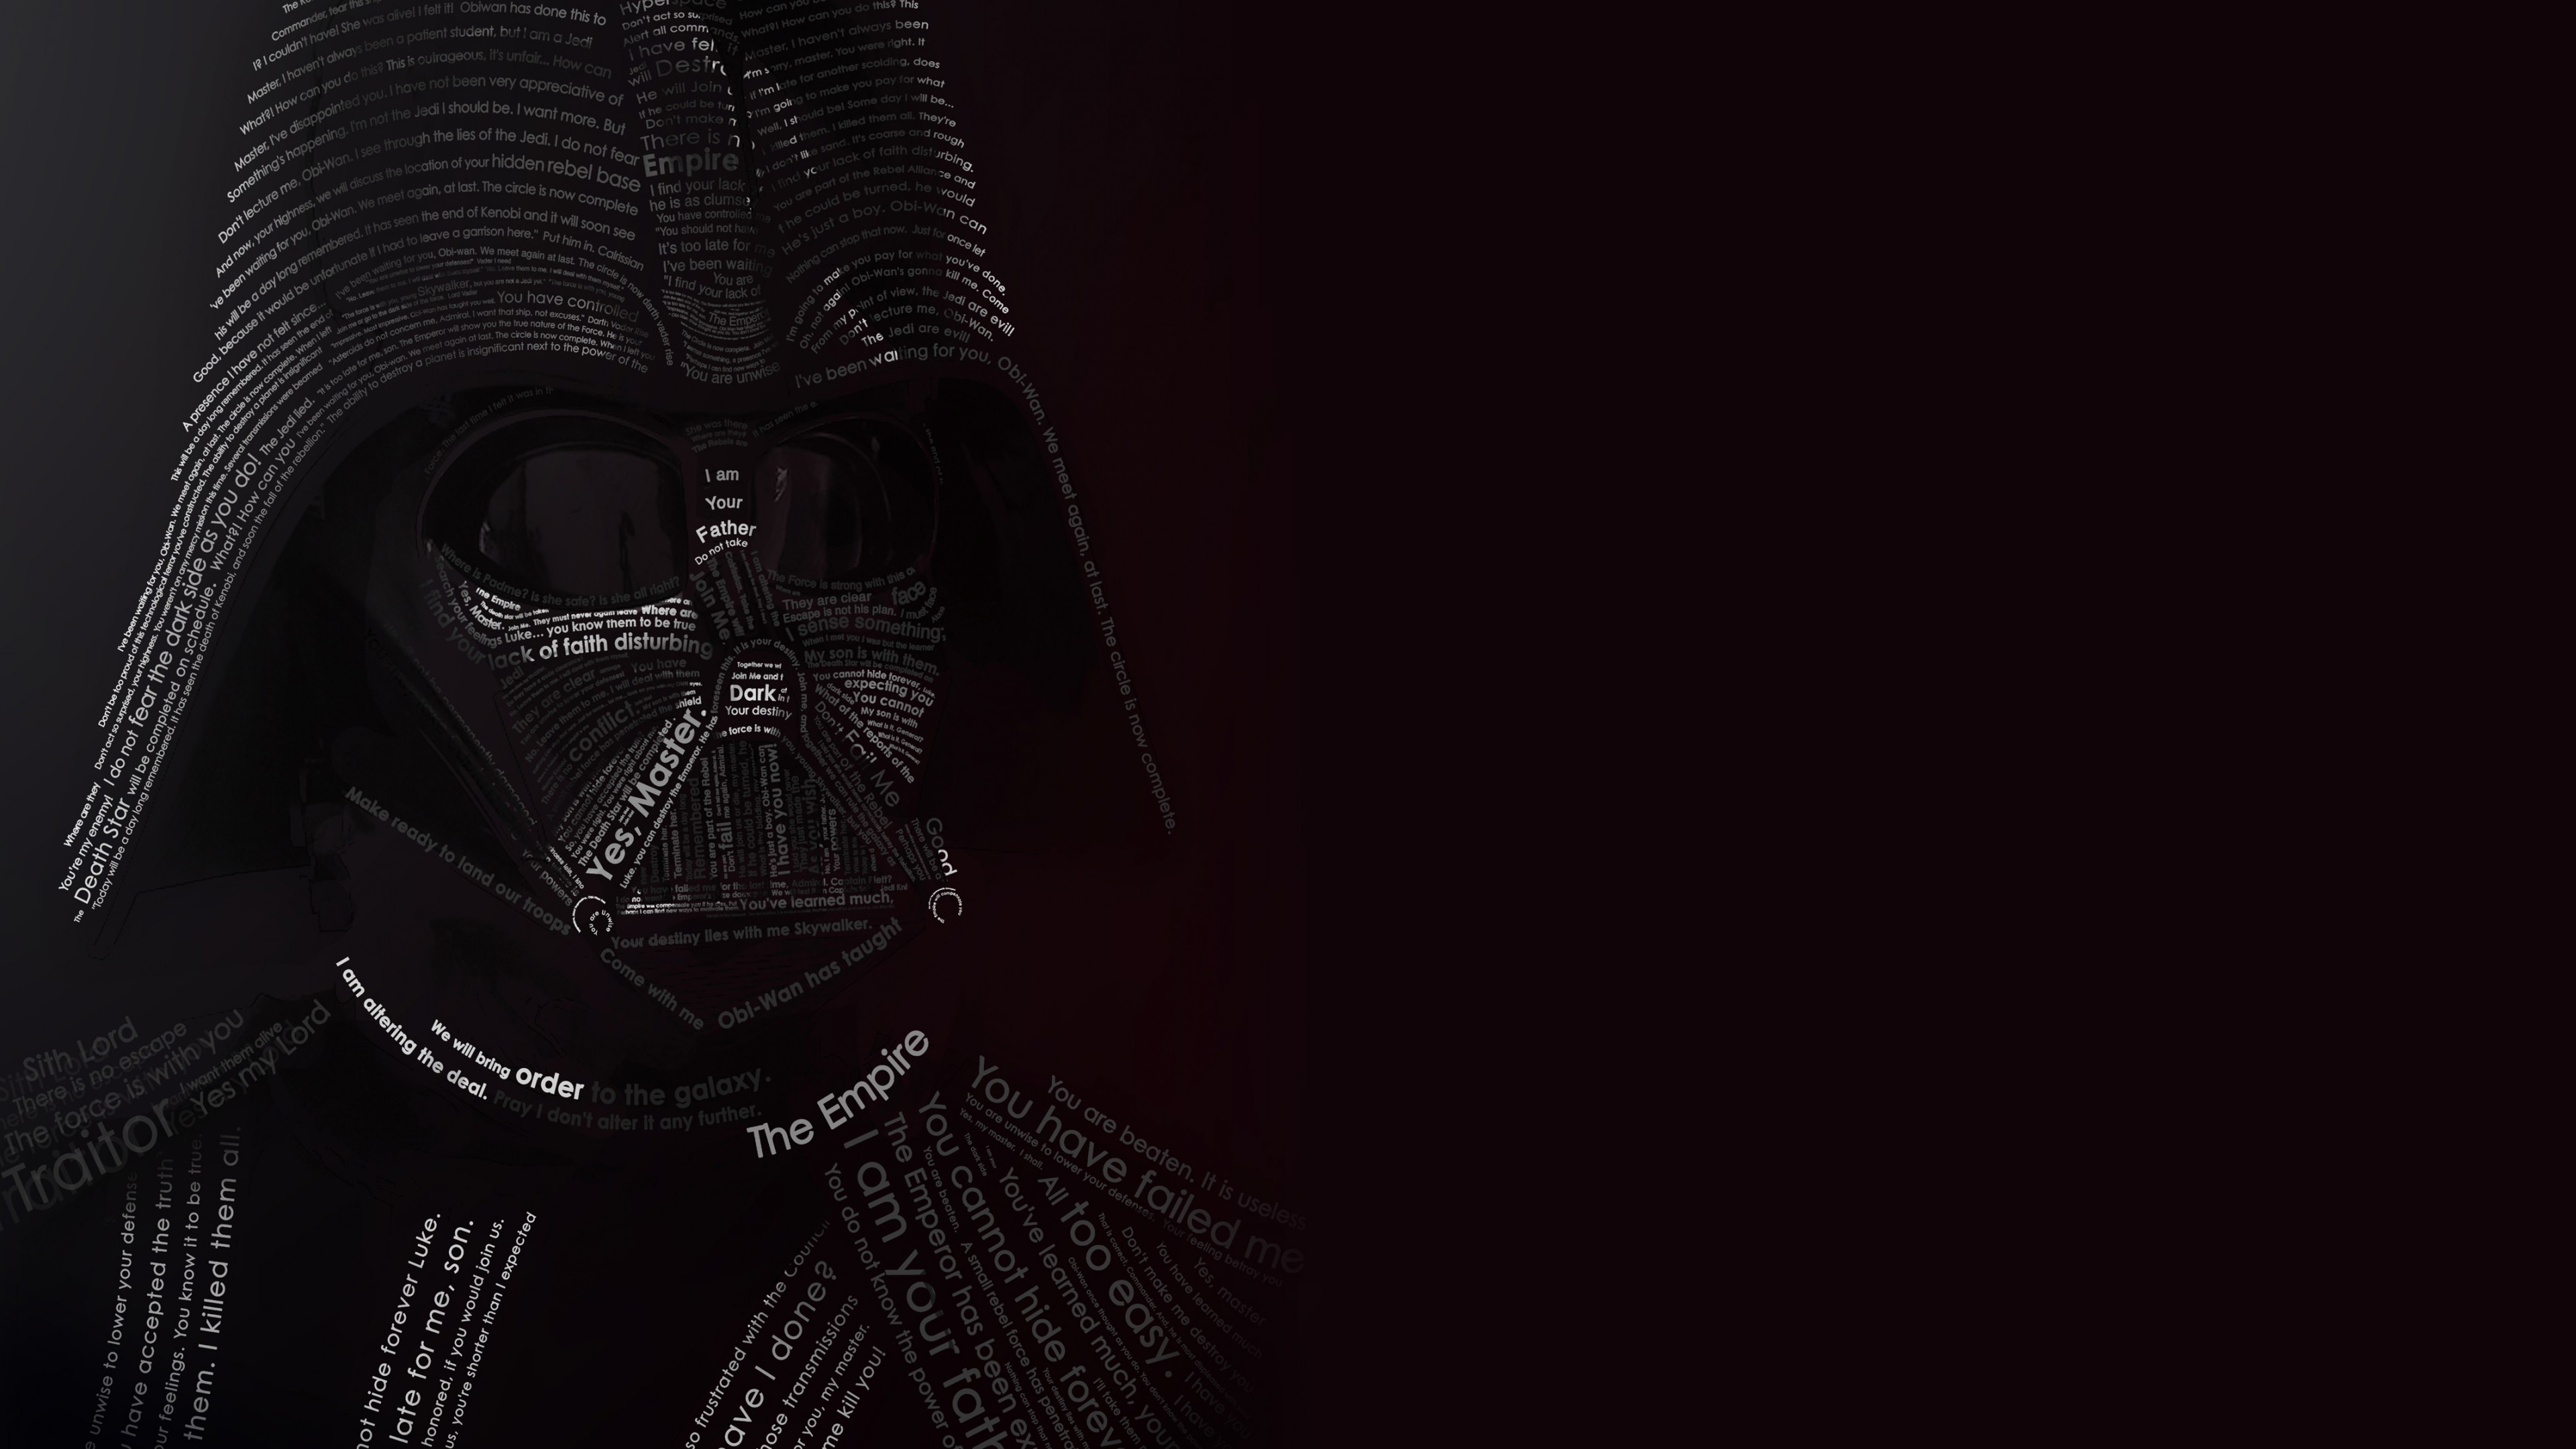 Darth Vader Typographic Portrait Wallpaper For Desktop 4k X